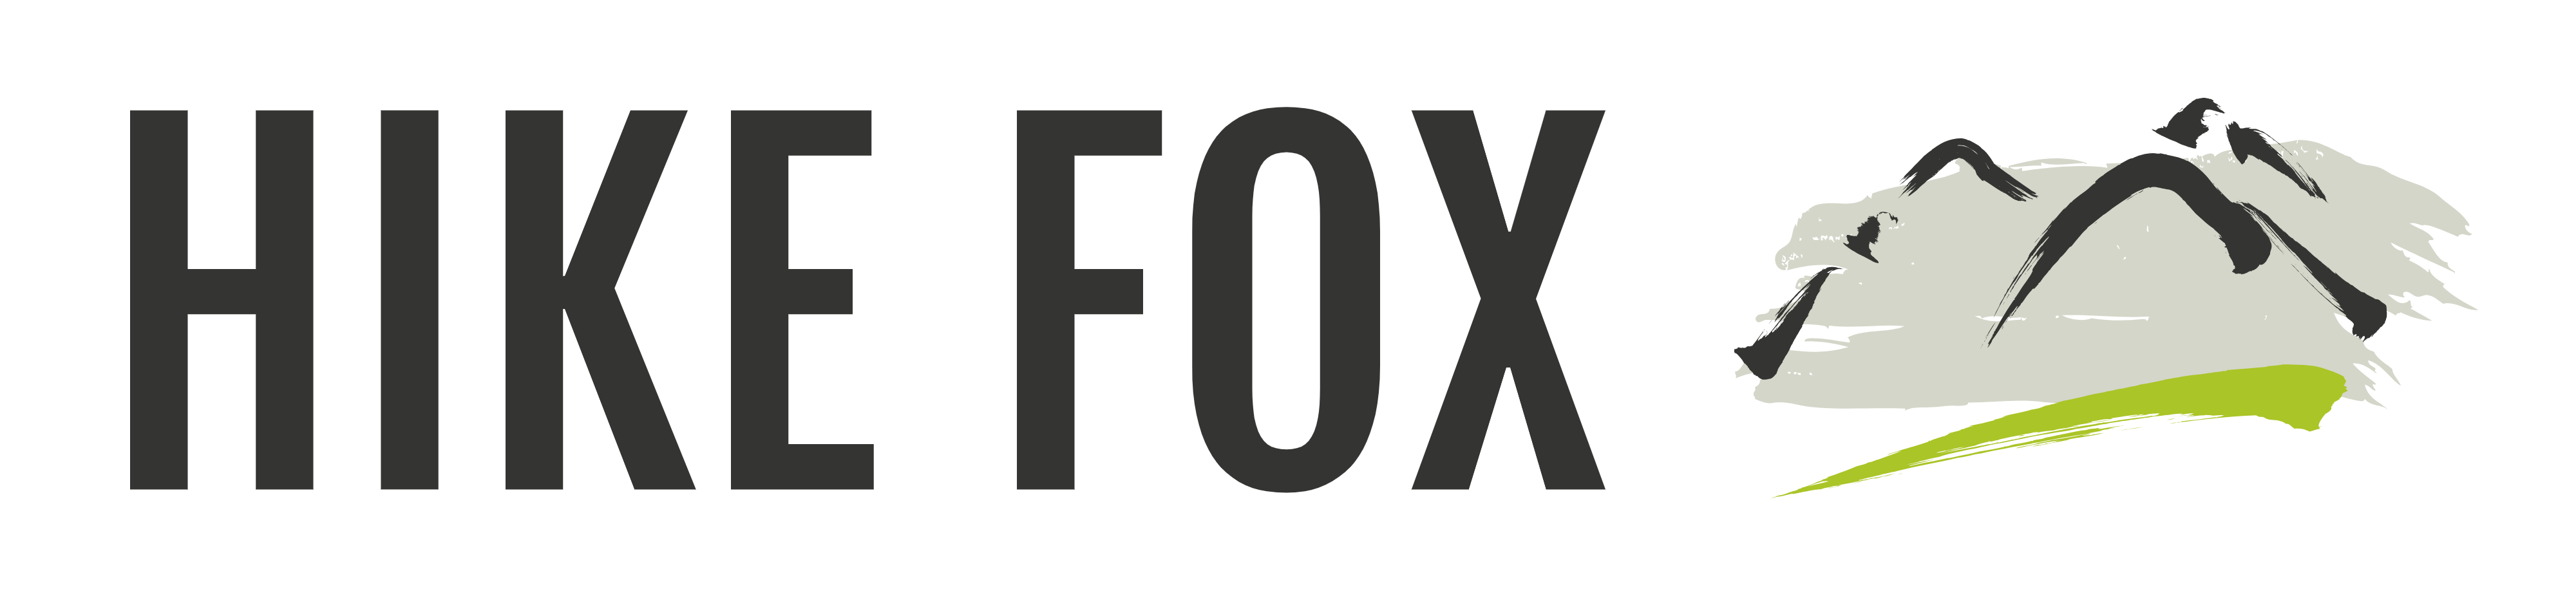 Hike Fox logo